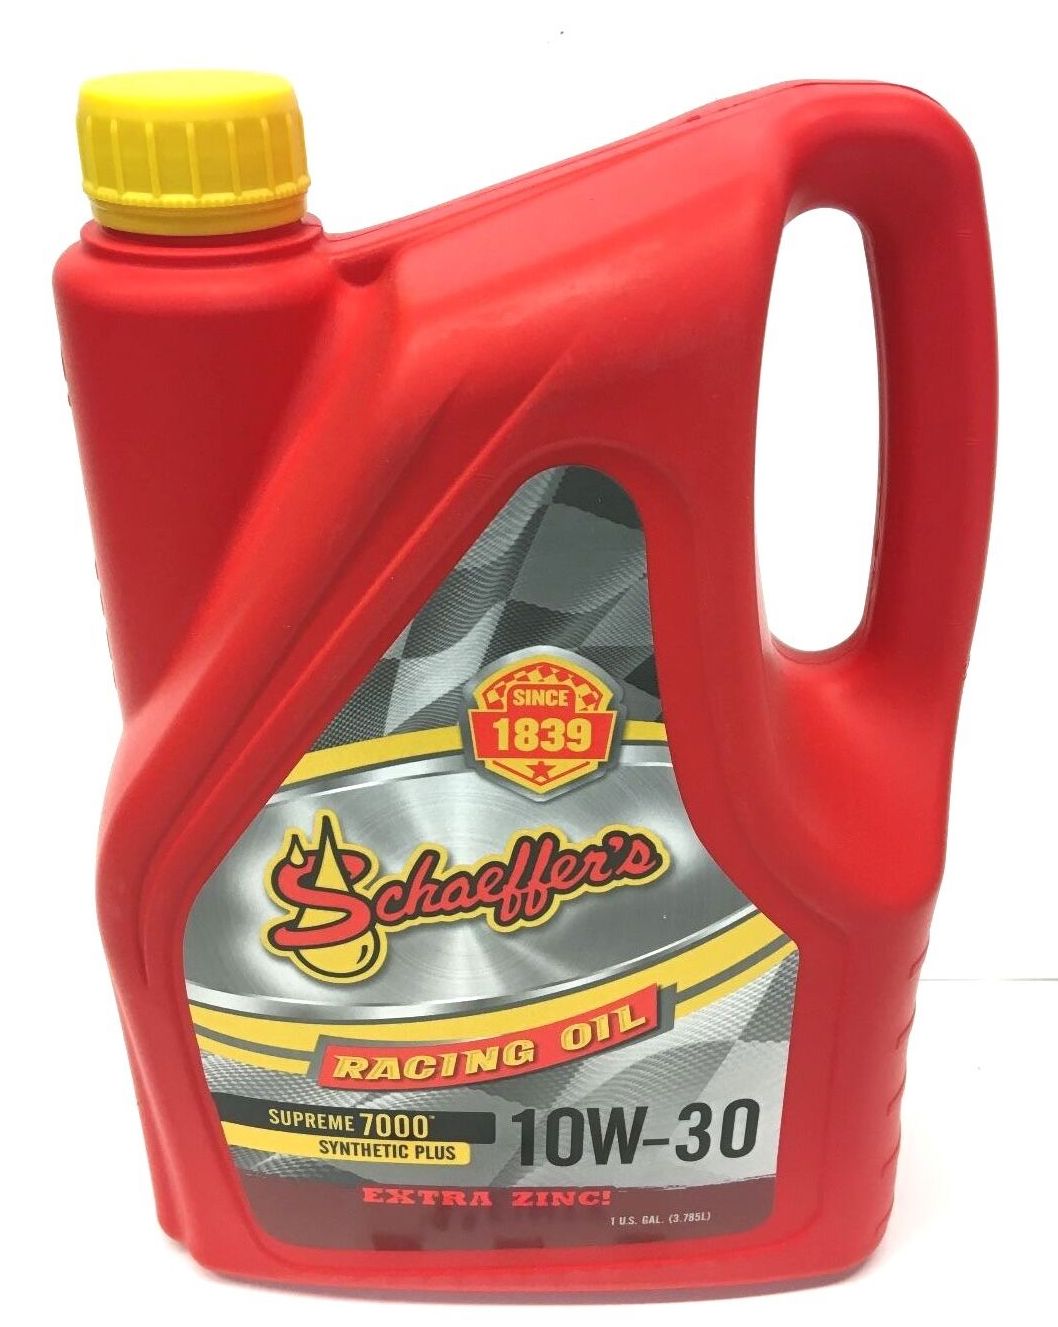 Schaeffer's Racing Oil 0709-006S Supreme 7000 Synthetic Plus 10W-30 - 1 gallon